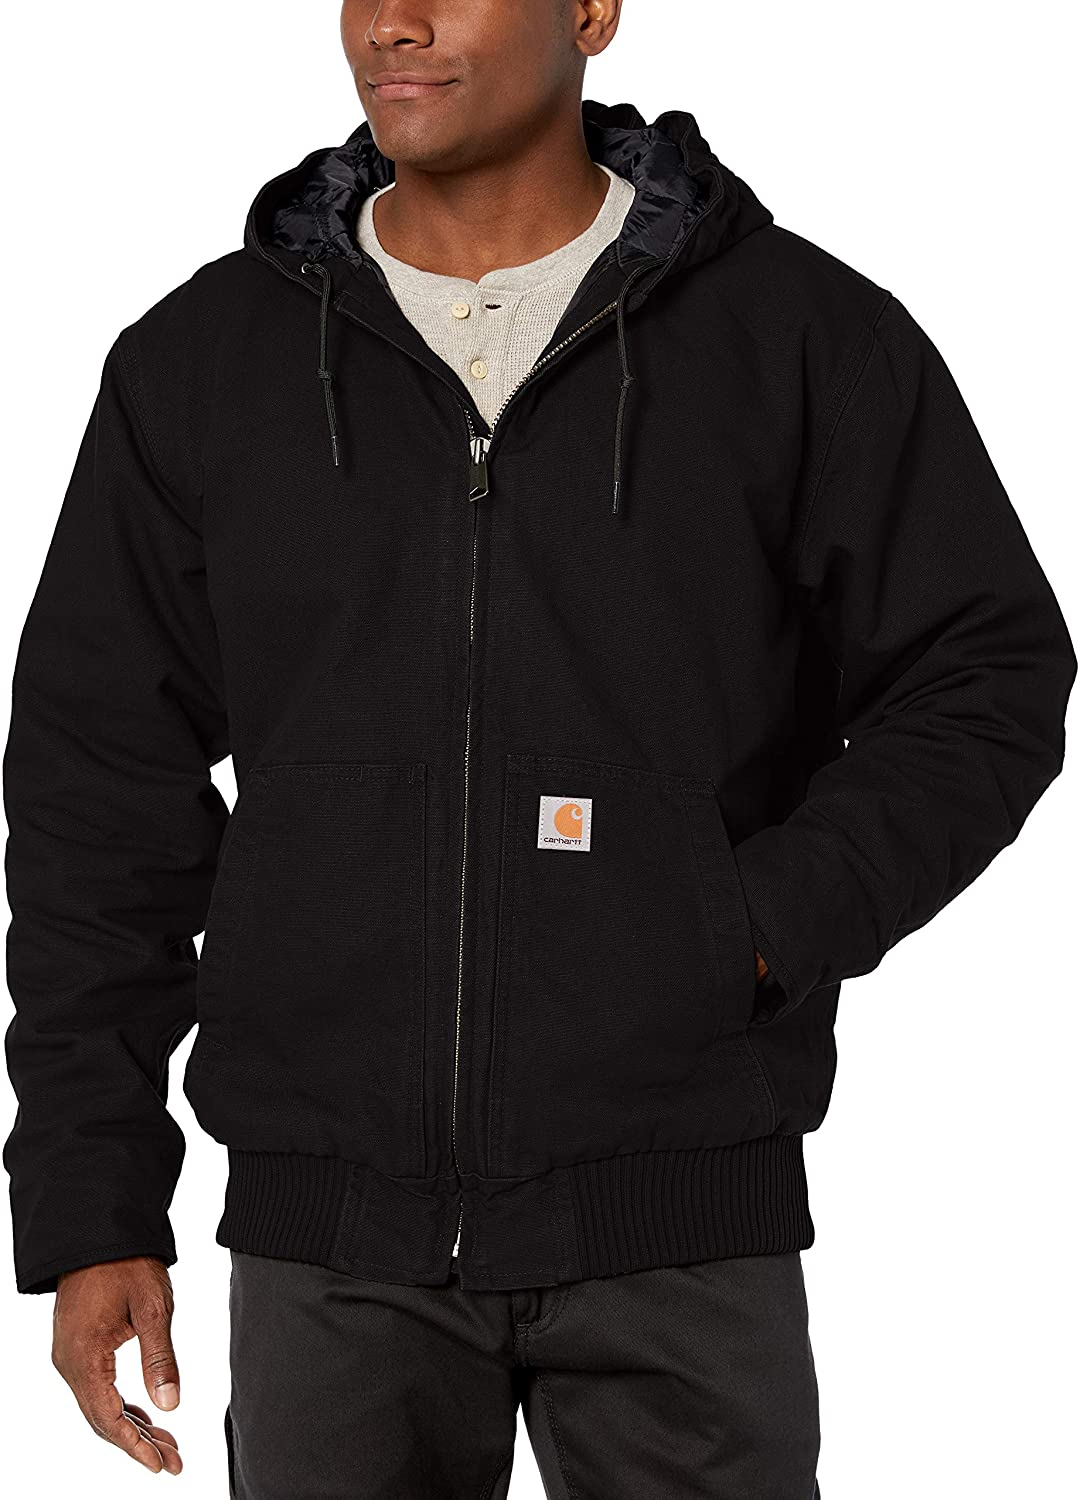 natuurlijk Comorama Ophef Carhartt mens Active Jacket J130 (Regular and Big & Tall Sizes) | eBay